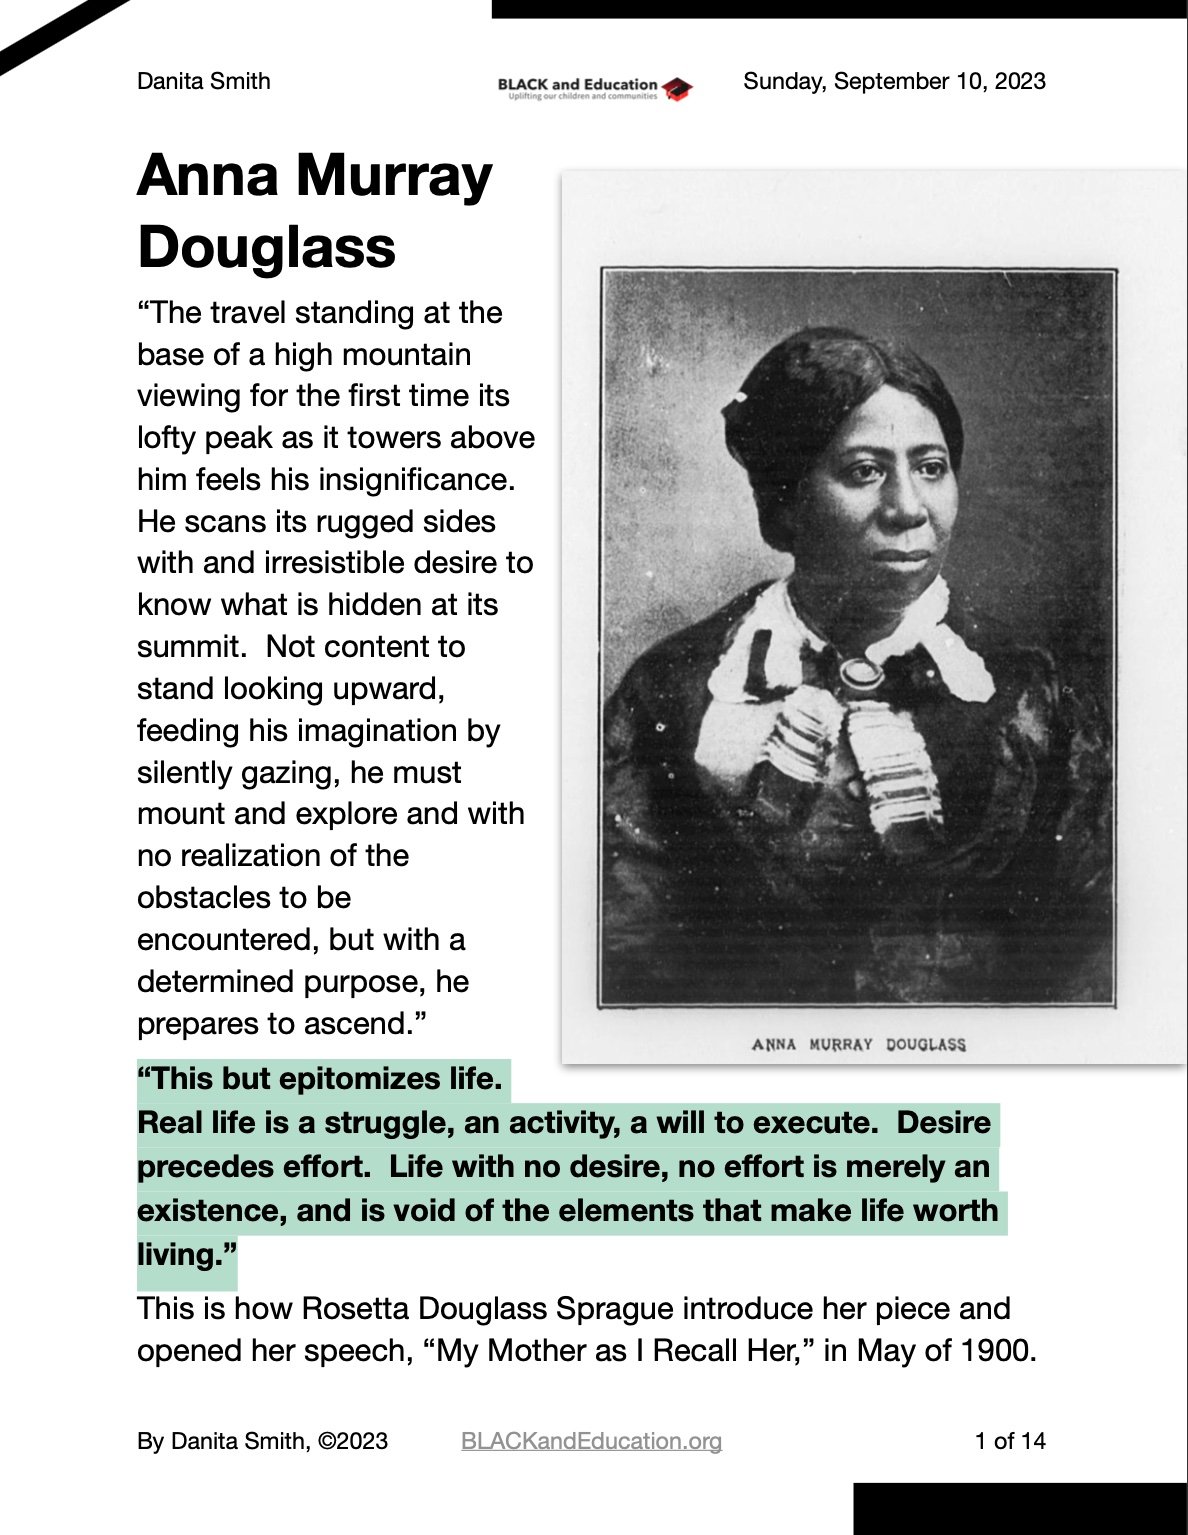 Anna Murray Douglass, Wife of Frederick Douglass for 44 Years